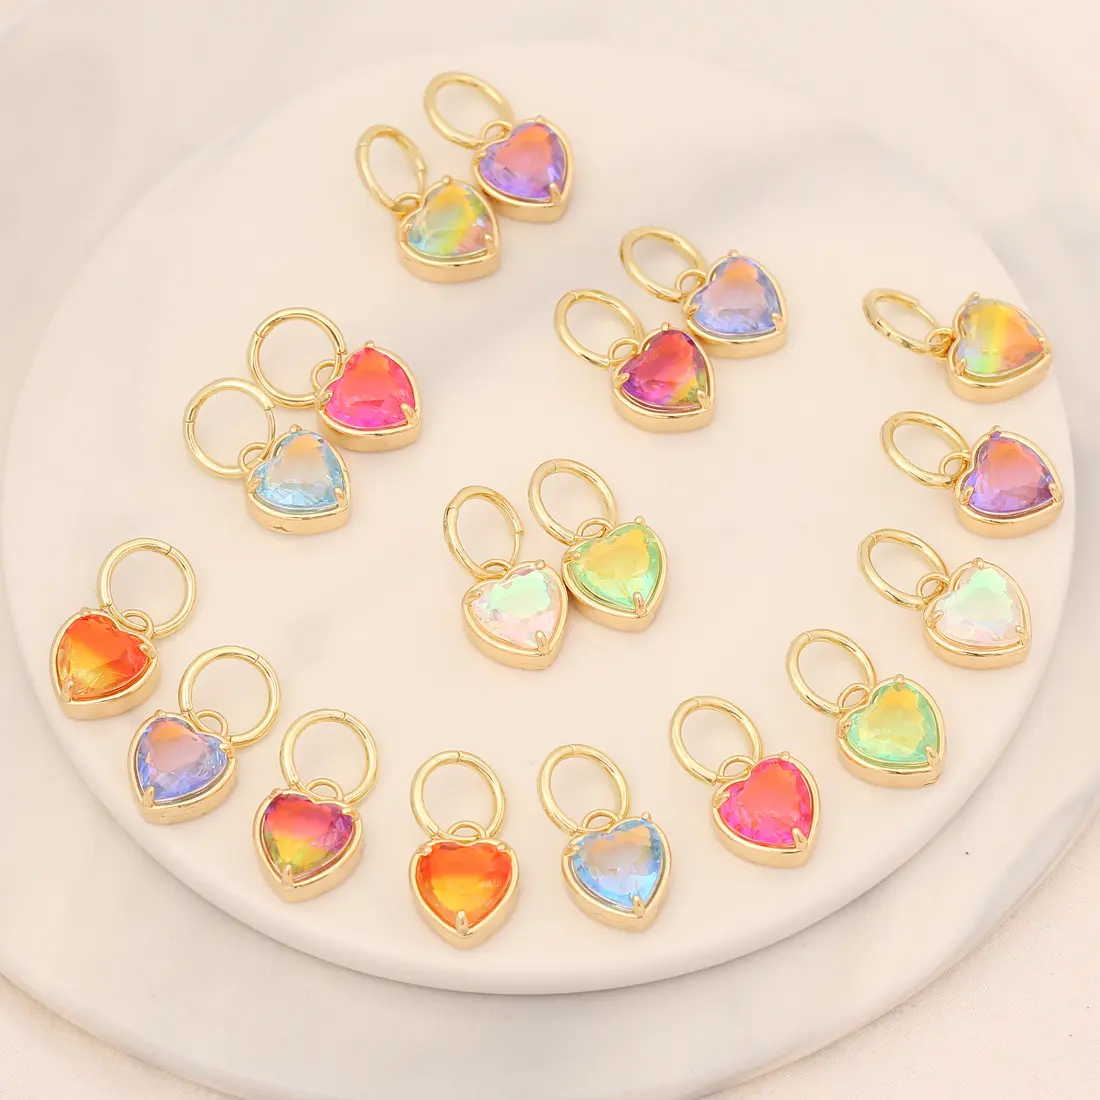 2022 New Unique Earrings Design Colorful CZ Candy Love Heart Shaped Drop Hoop Gold Earrings Women Girls Jewelry Accessories